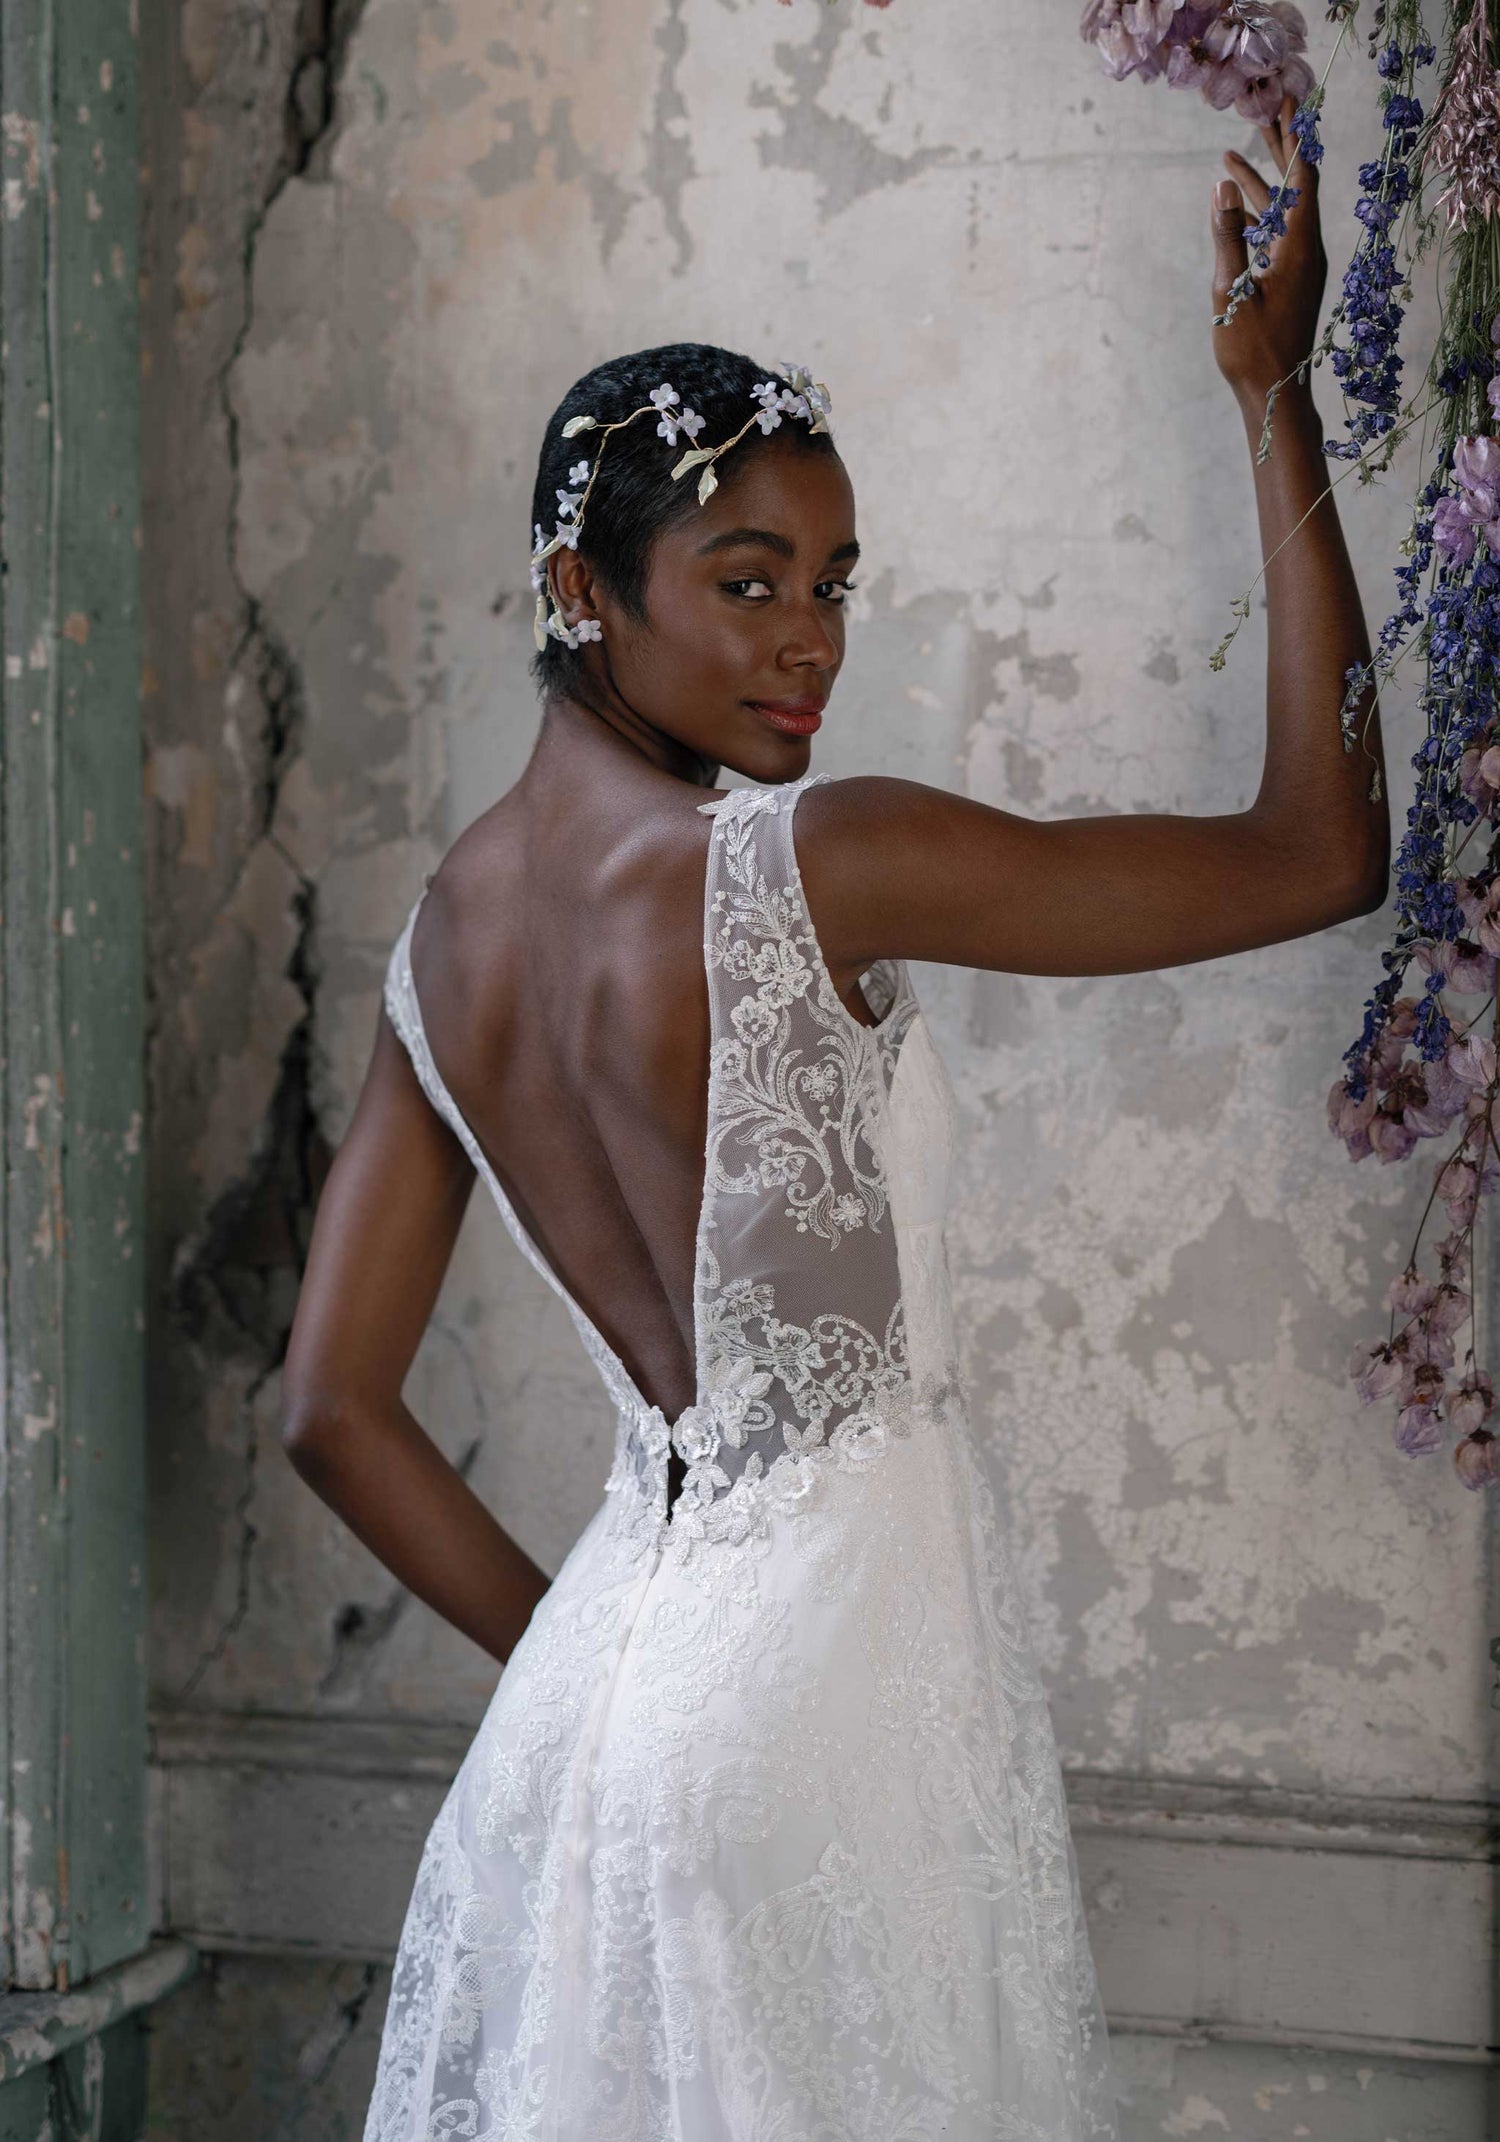 Crystal Wedding Dress with deep open plunging wedding dress design